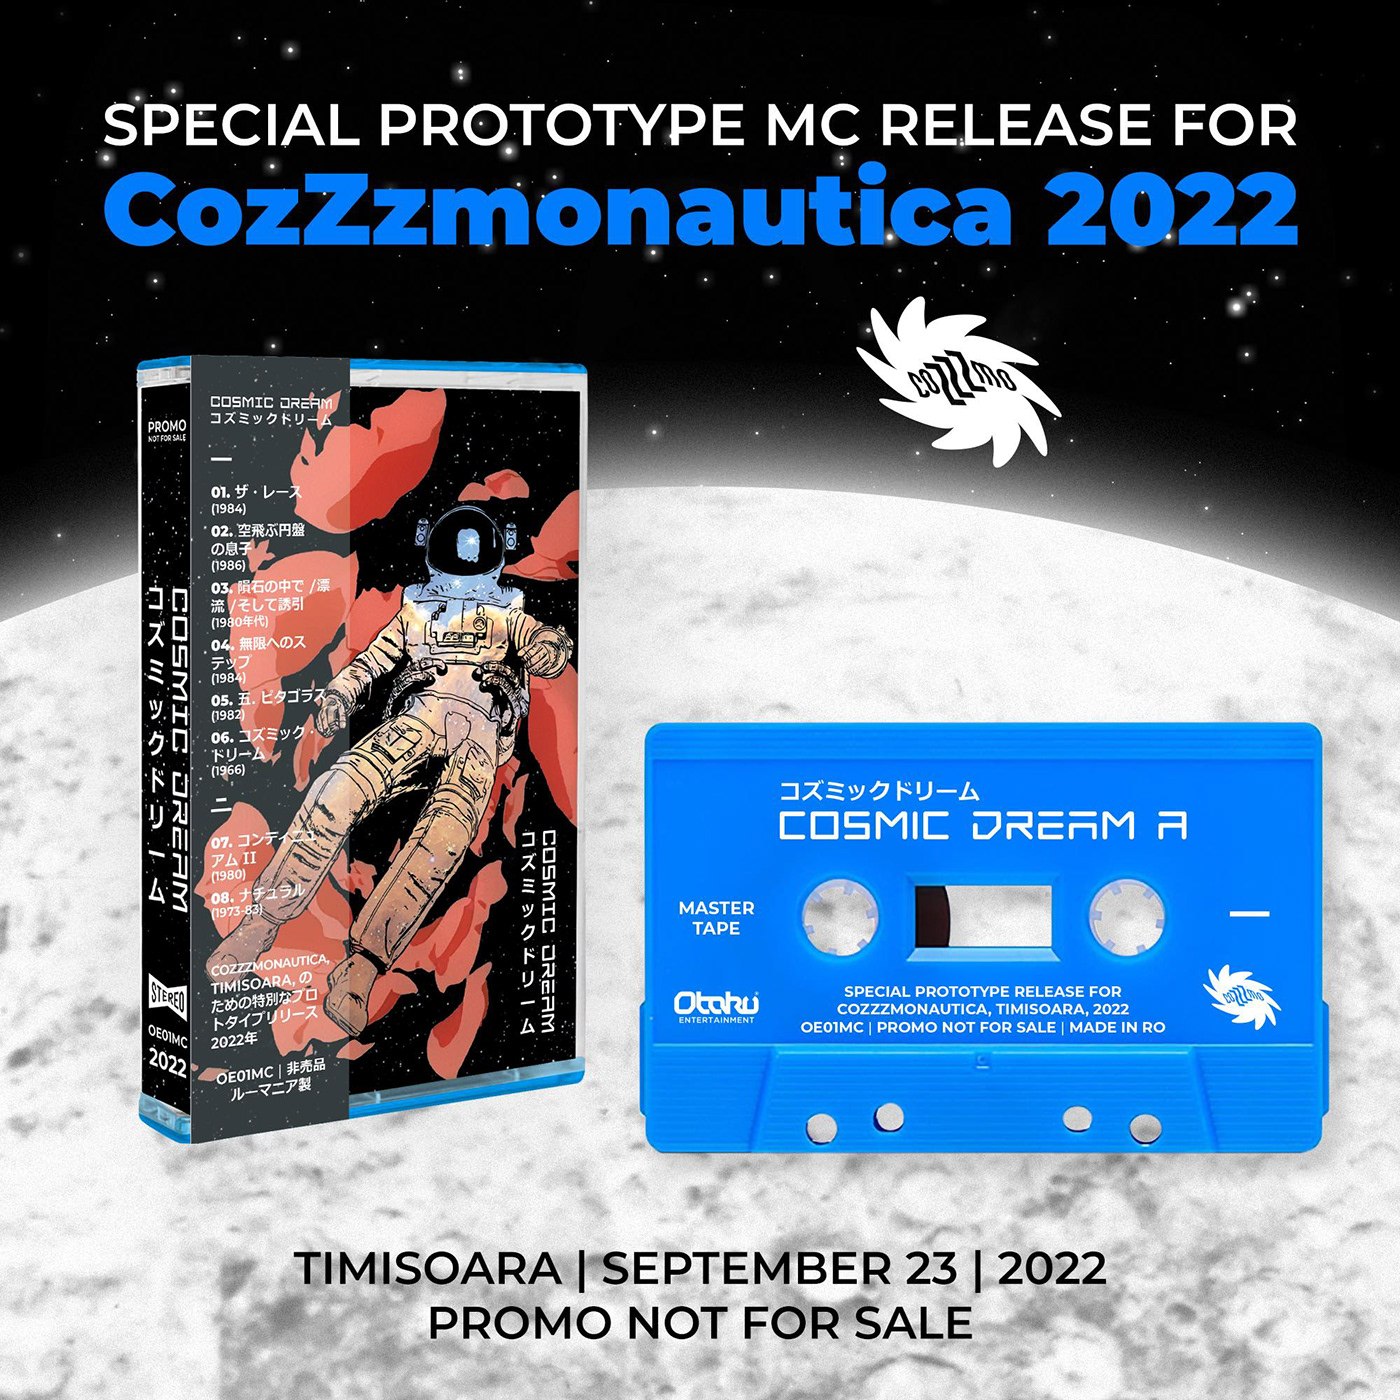 analog music cassette retrofuturism vaporwave aesthetic 80s japan analogmusic musiccassette